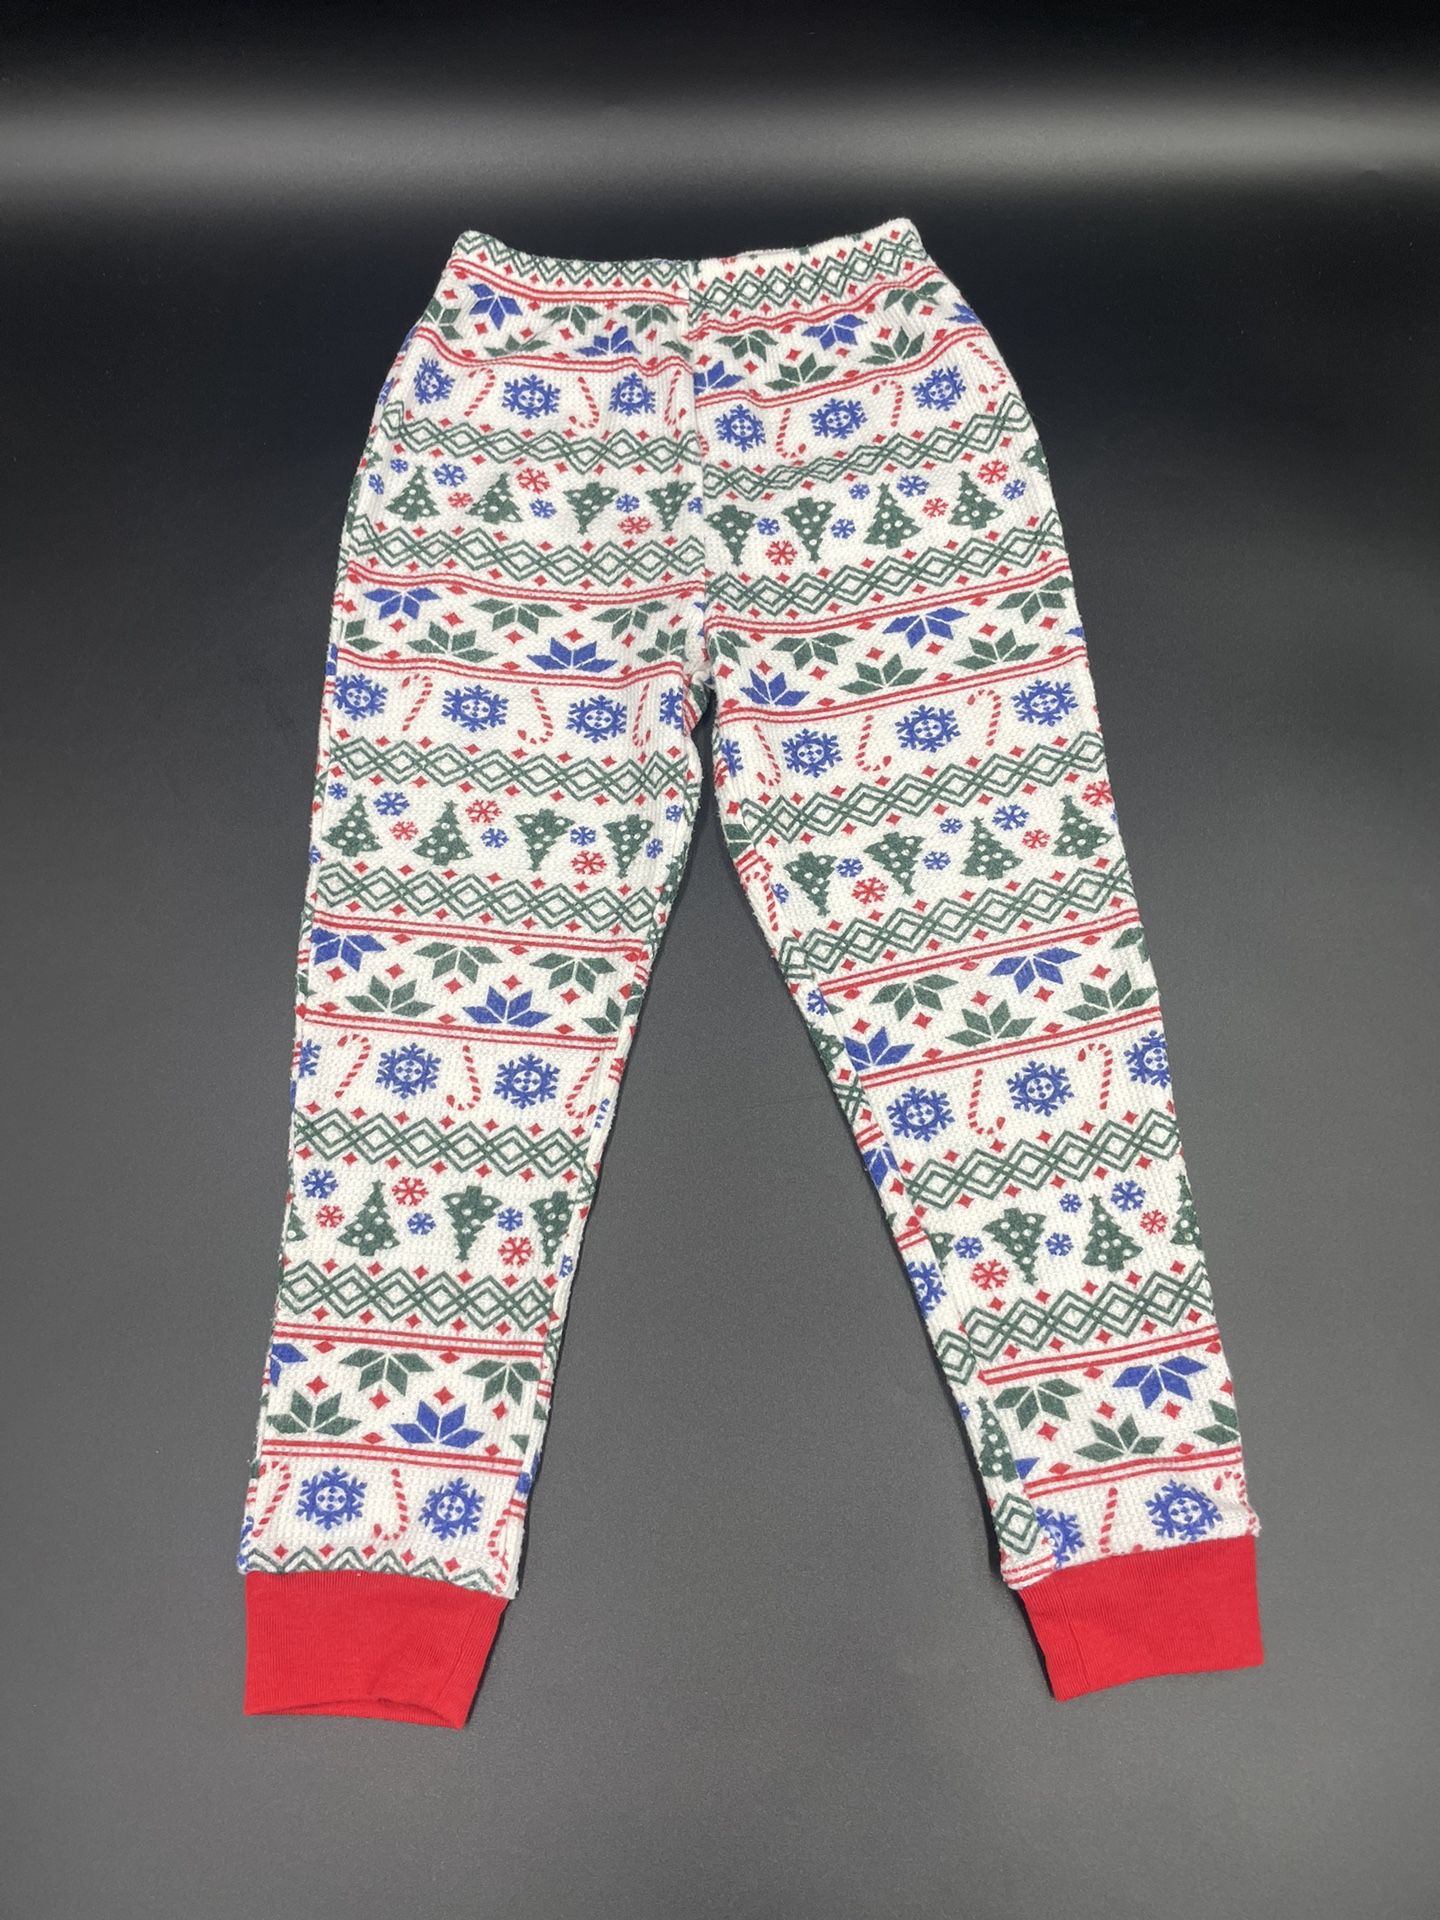 Nordstrom 4T sleepwear Christmas tree/snowflake pajama set